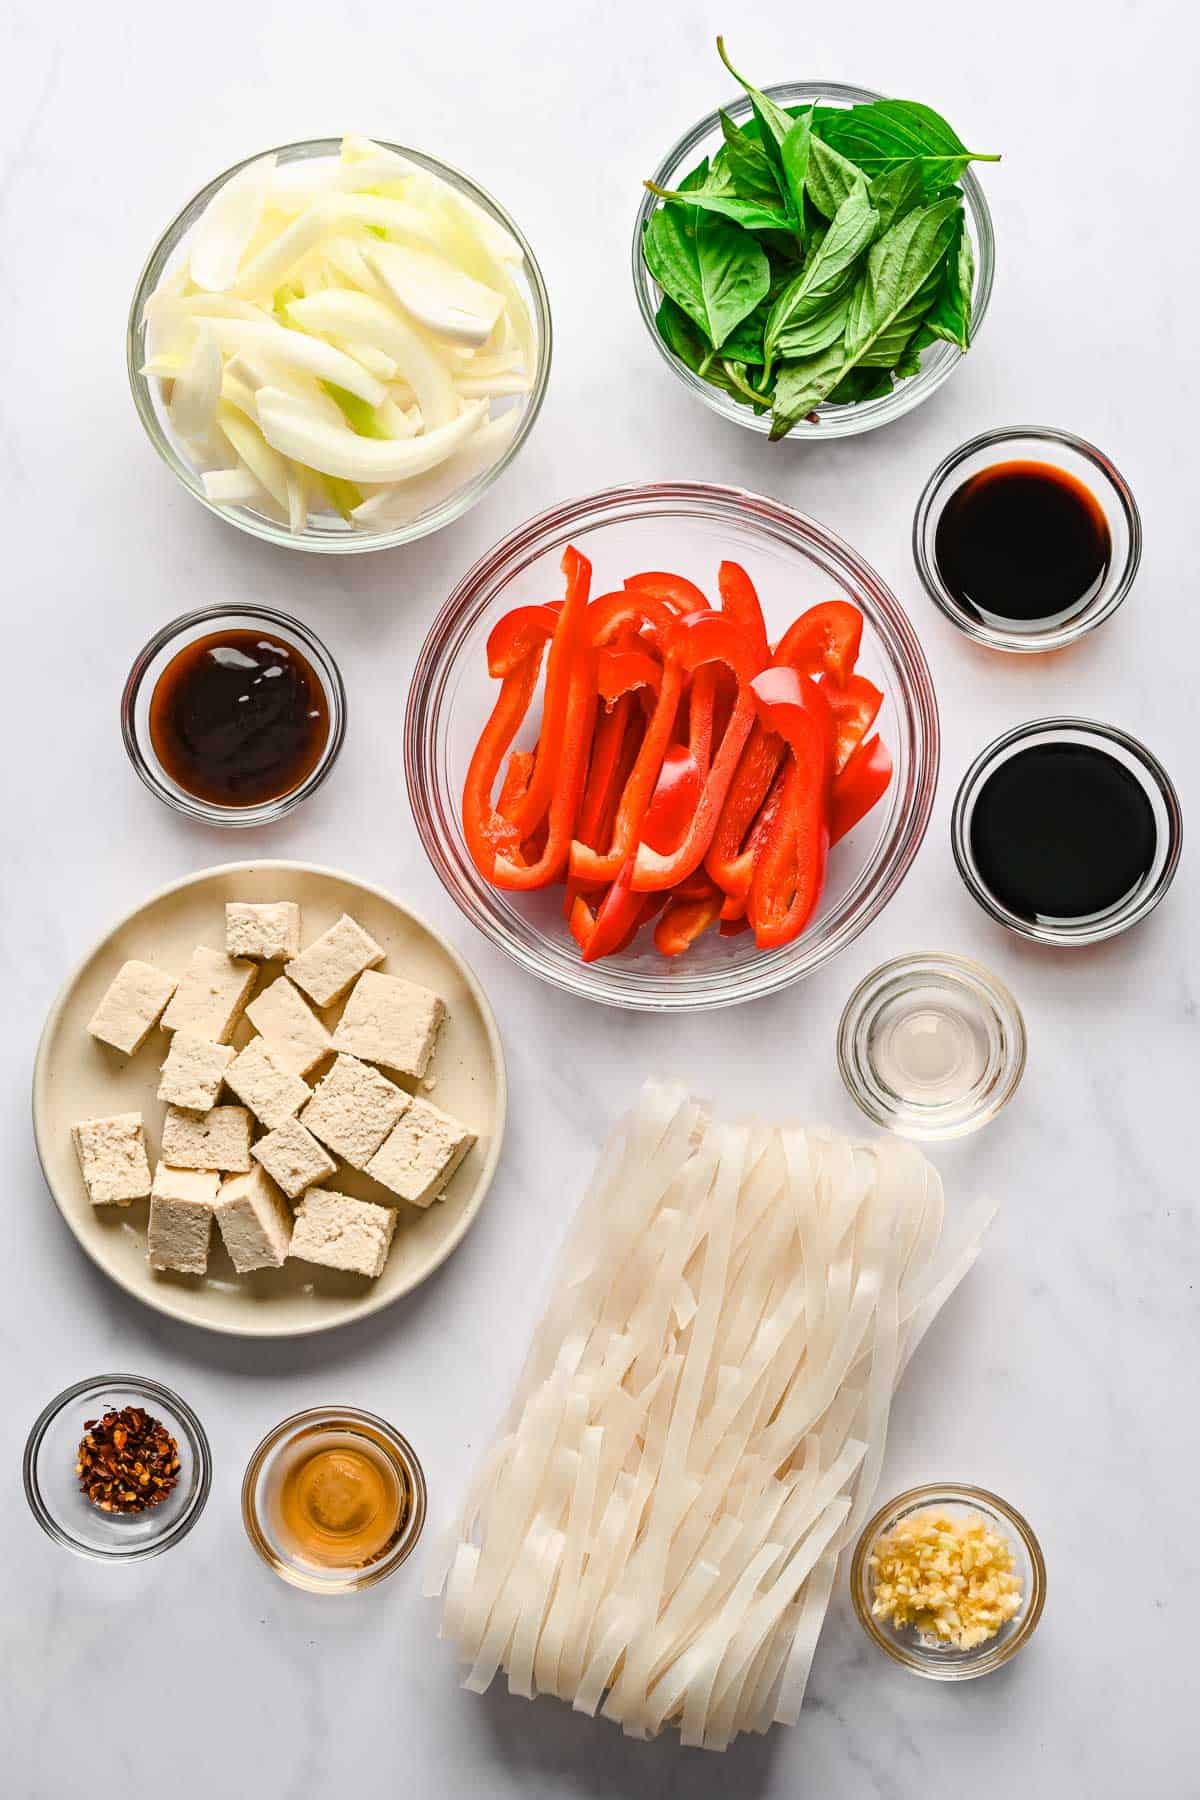 Ingredients for Thai drunken noodles with tofu.